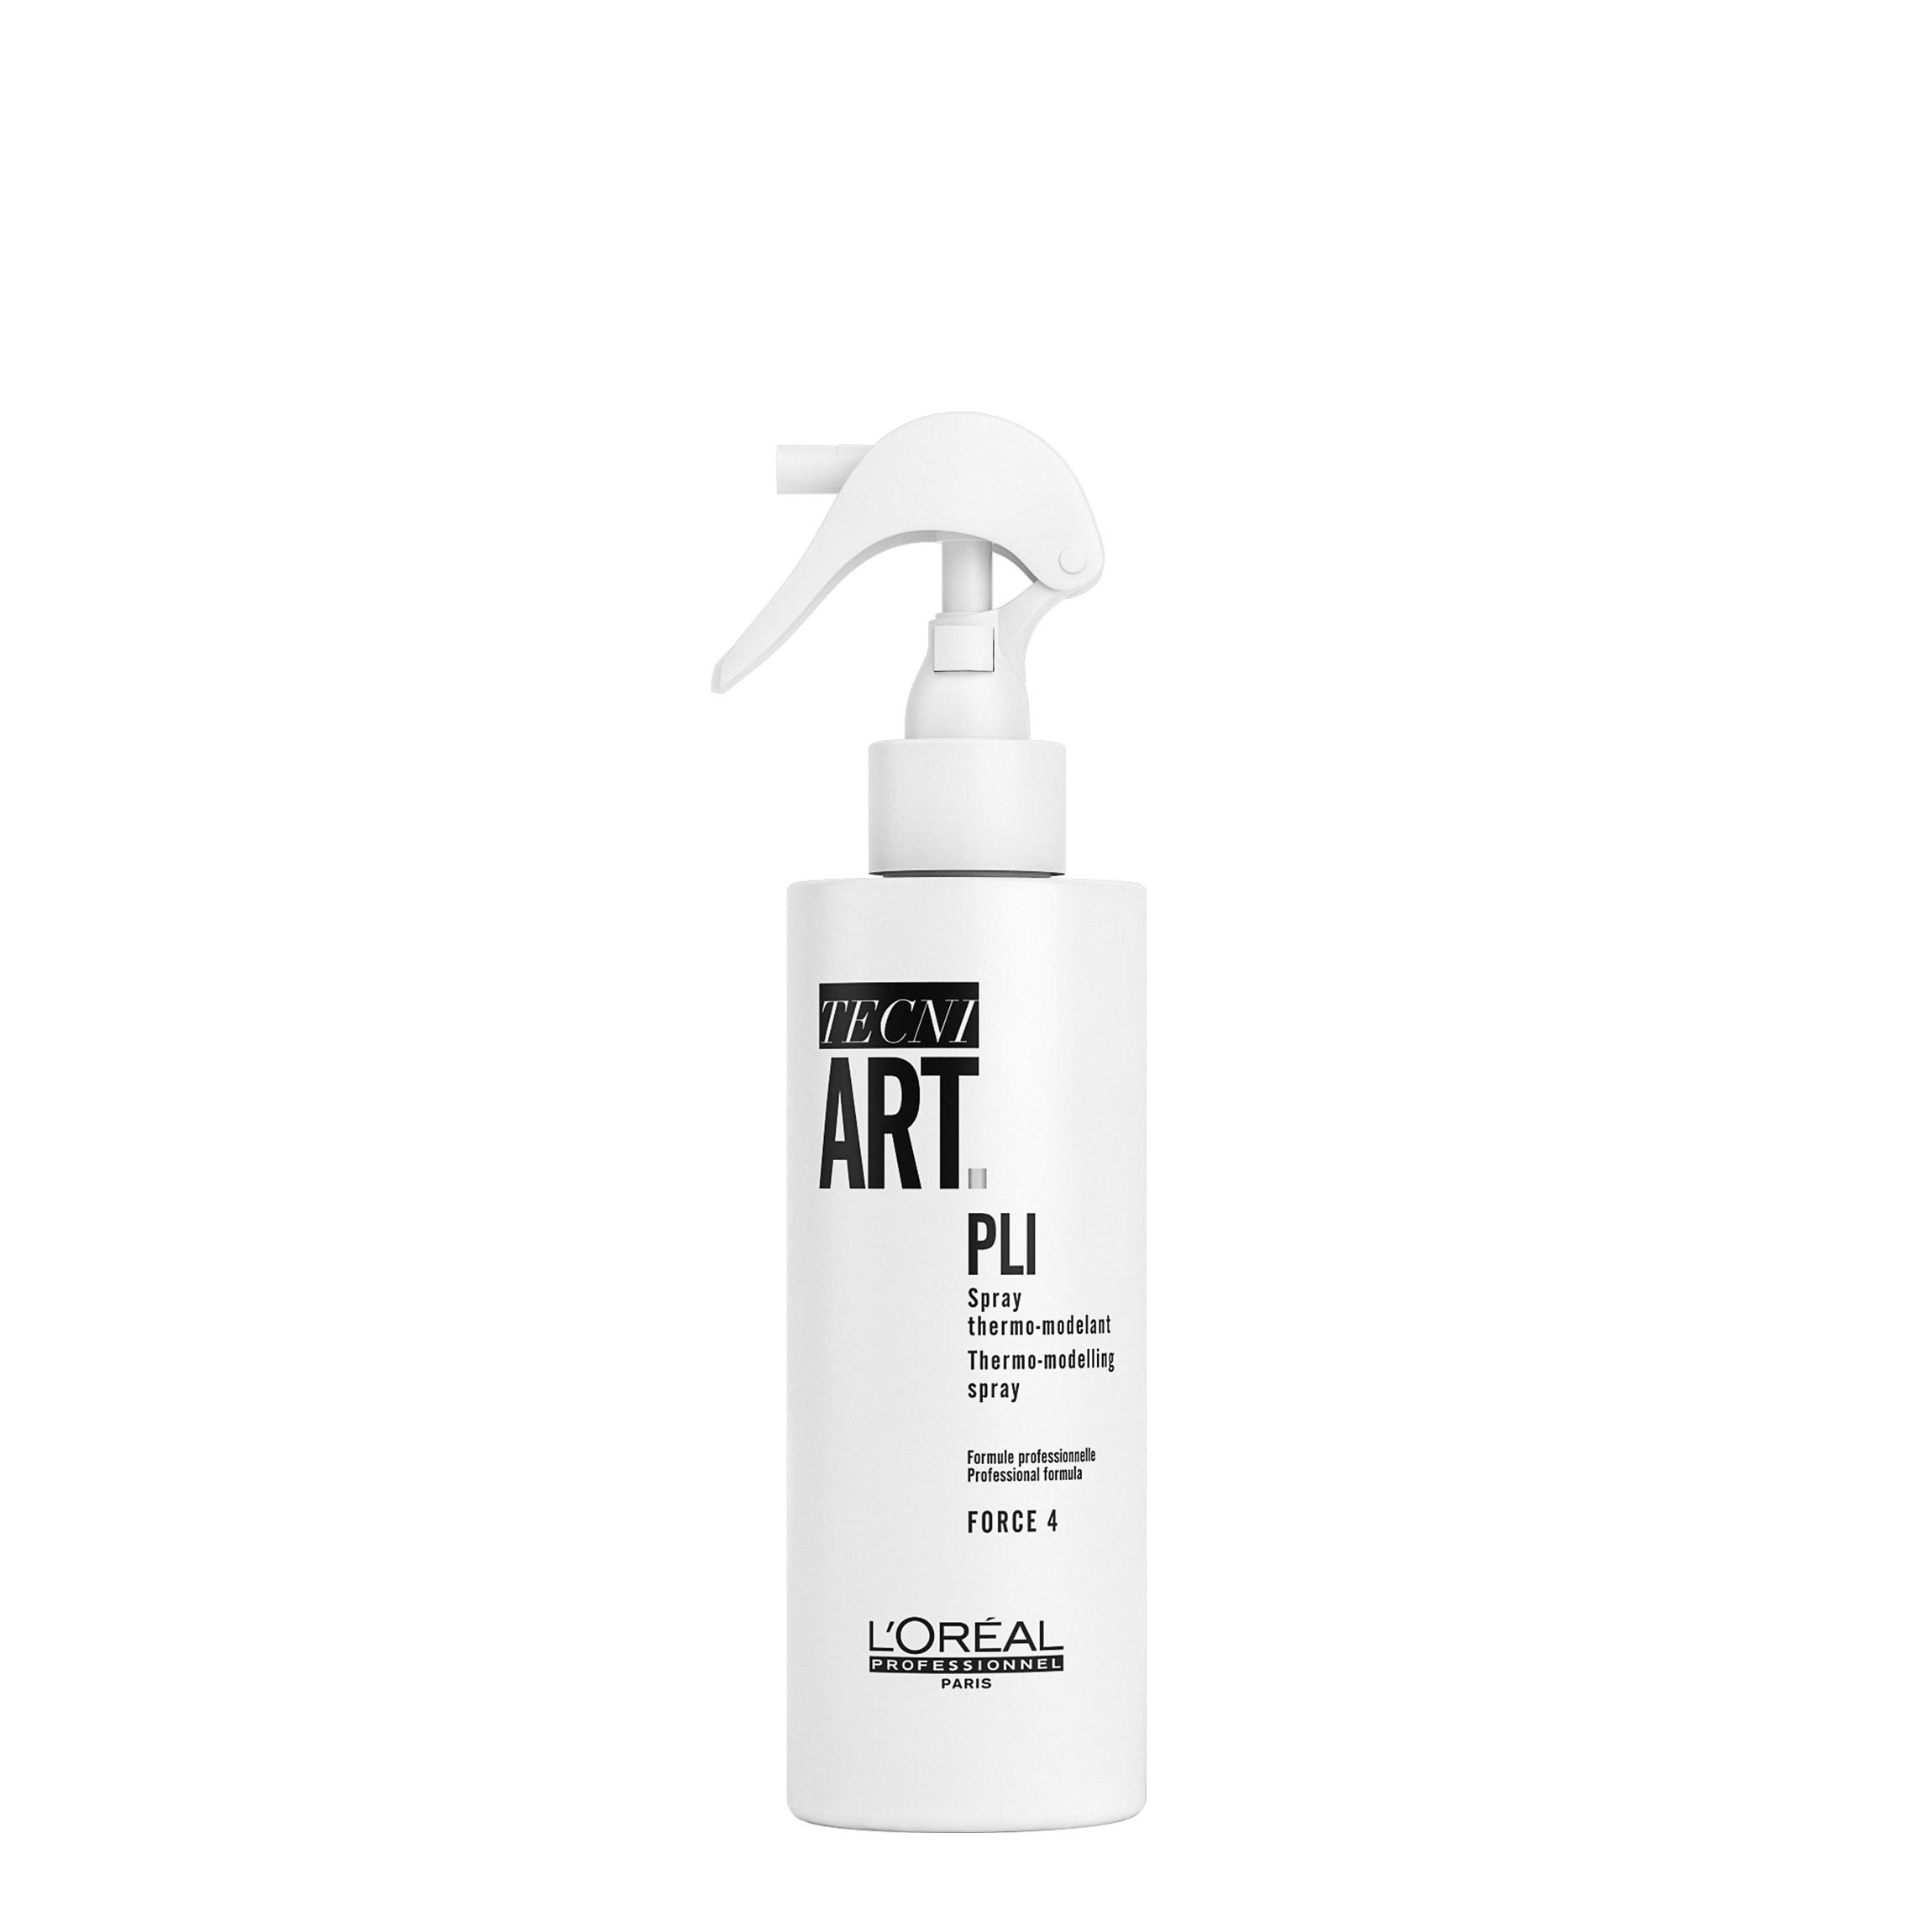 TECNI.ART - Pli-Volumizing Blow-Dry Spray - 190ml, Shop Hair Products